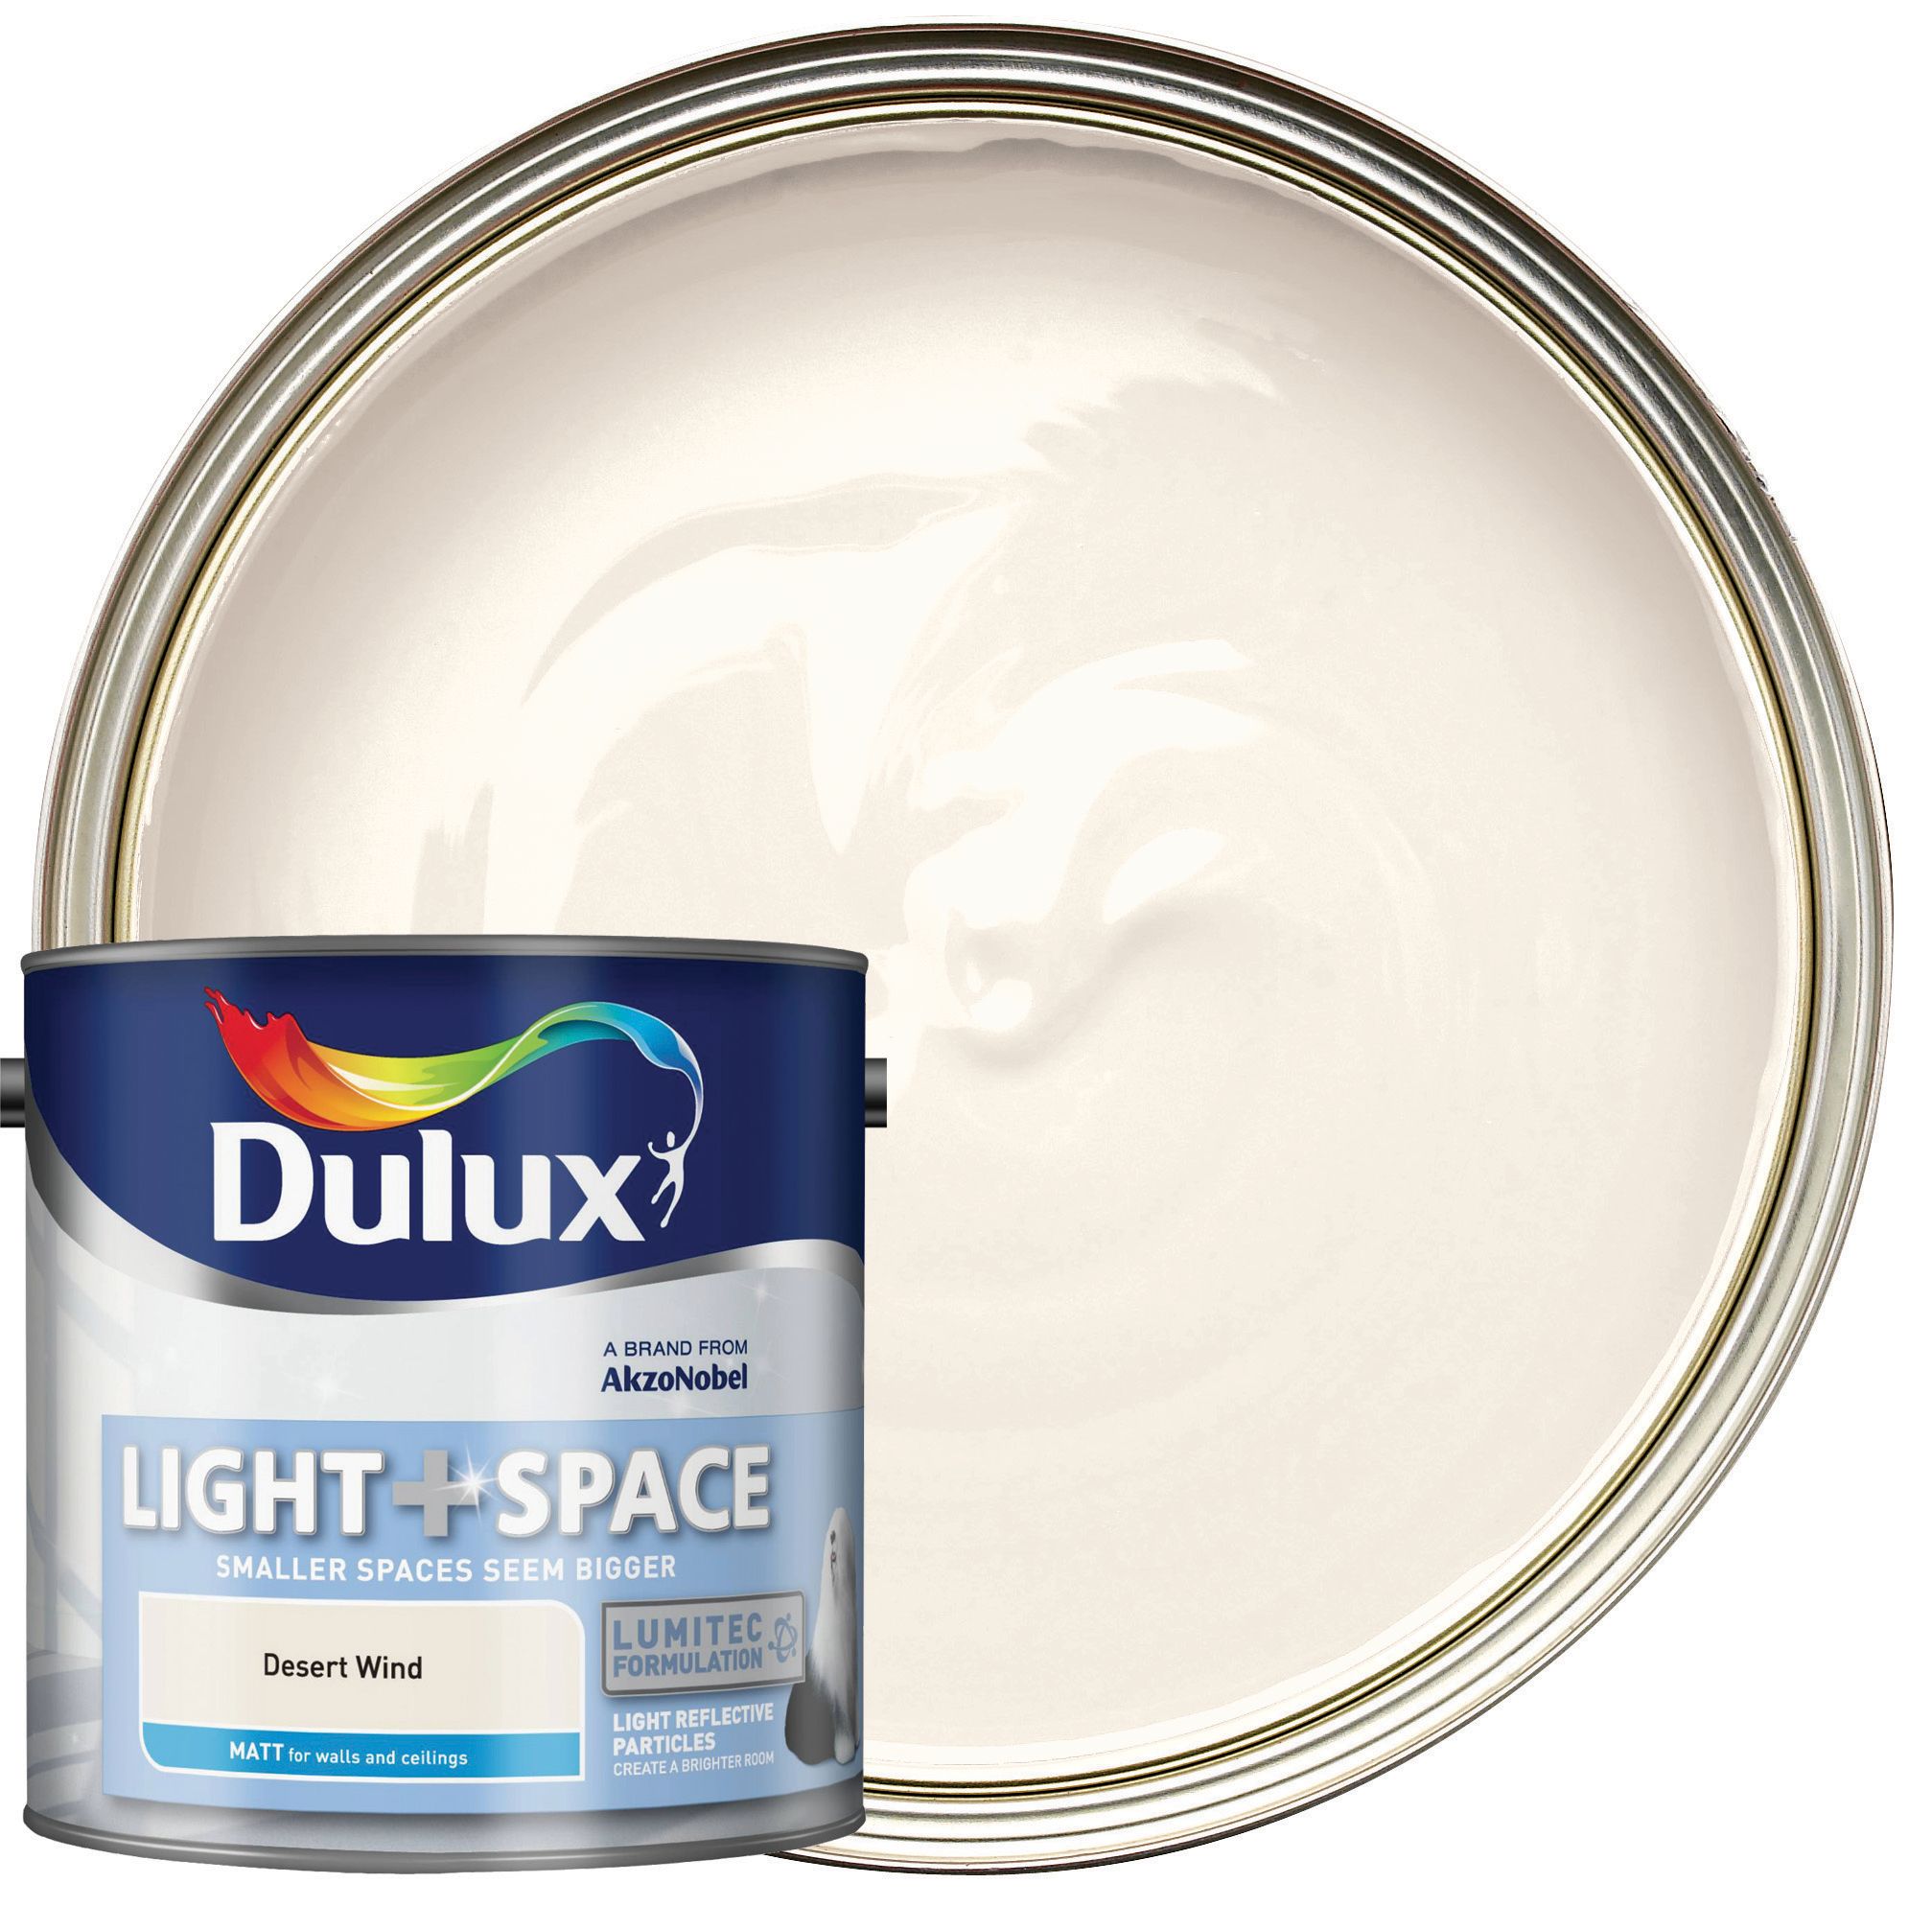 Dulux Light+ Space Matt Emulsion Paint - Desert Wind - 2.5L